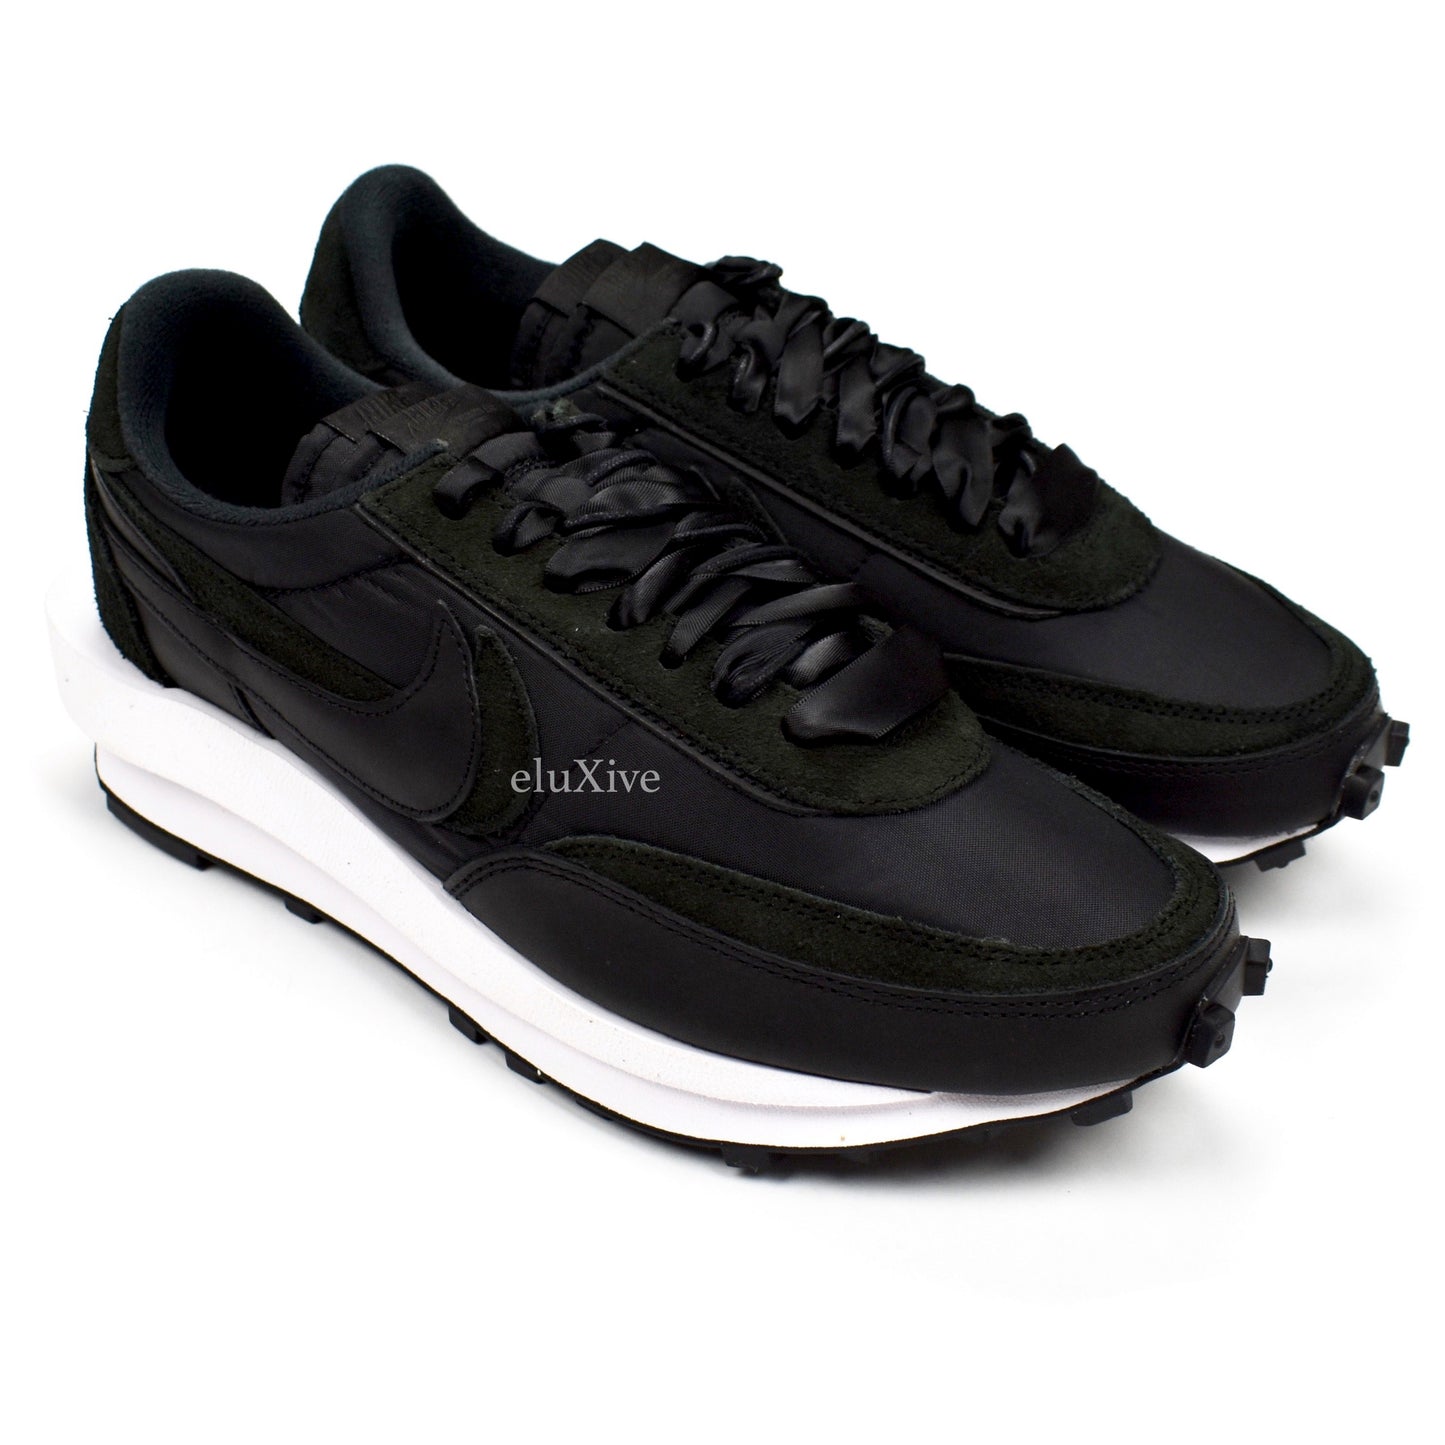 Nike x Sacai - LDWaffle Nylon (Black/Black)